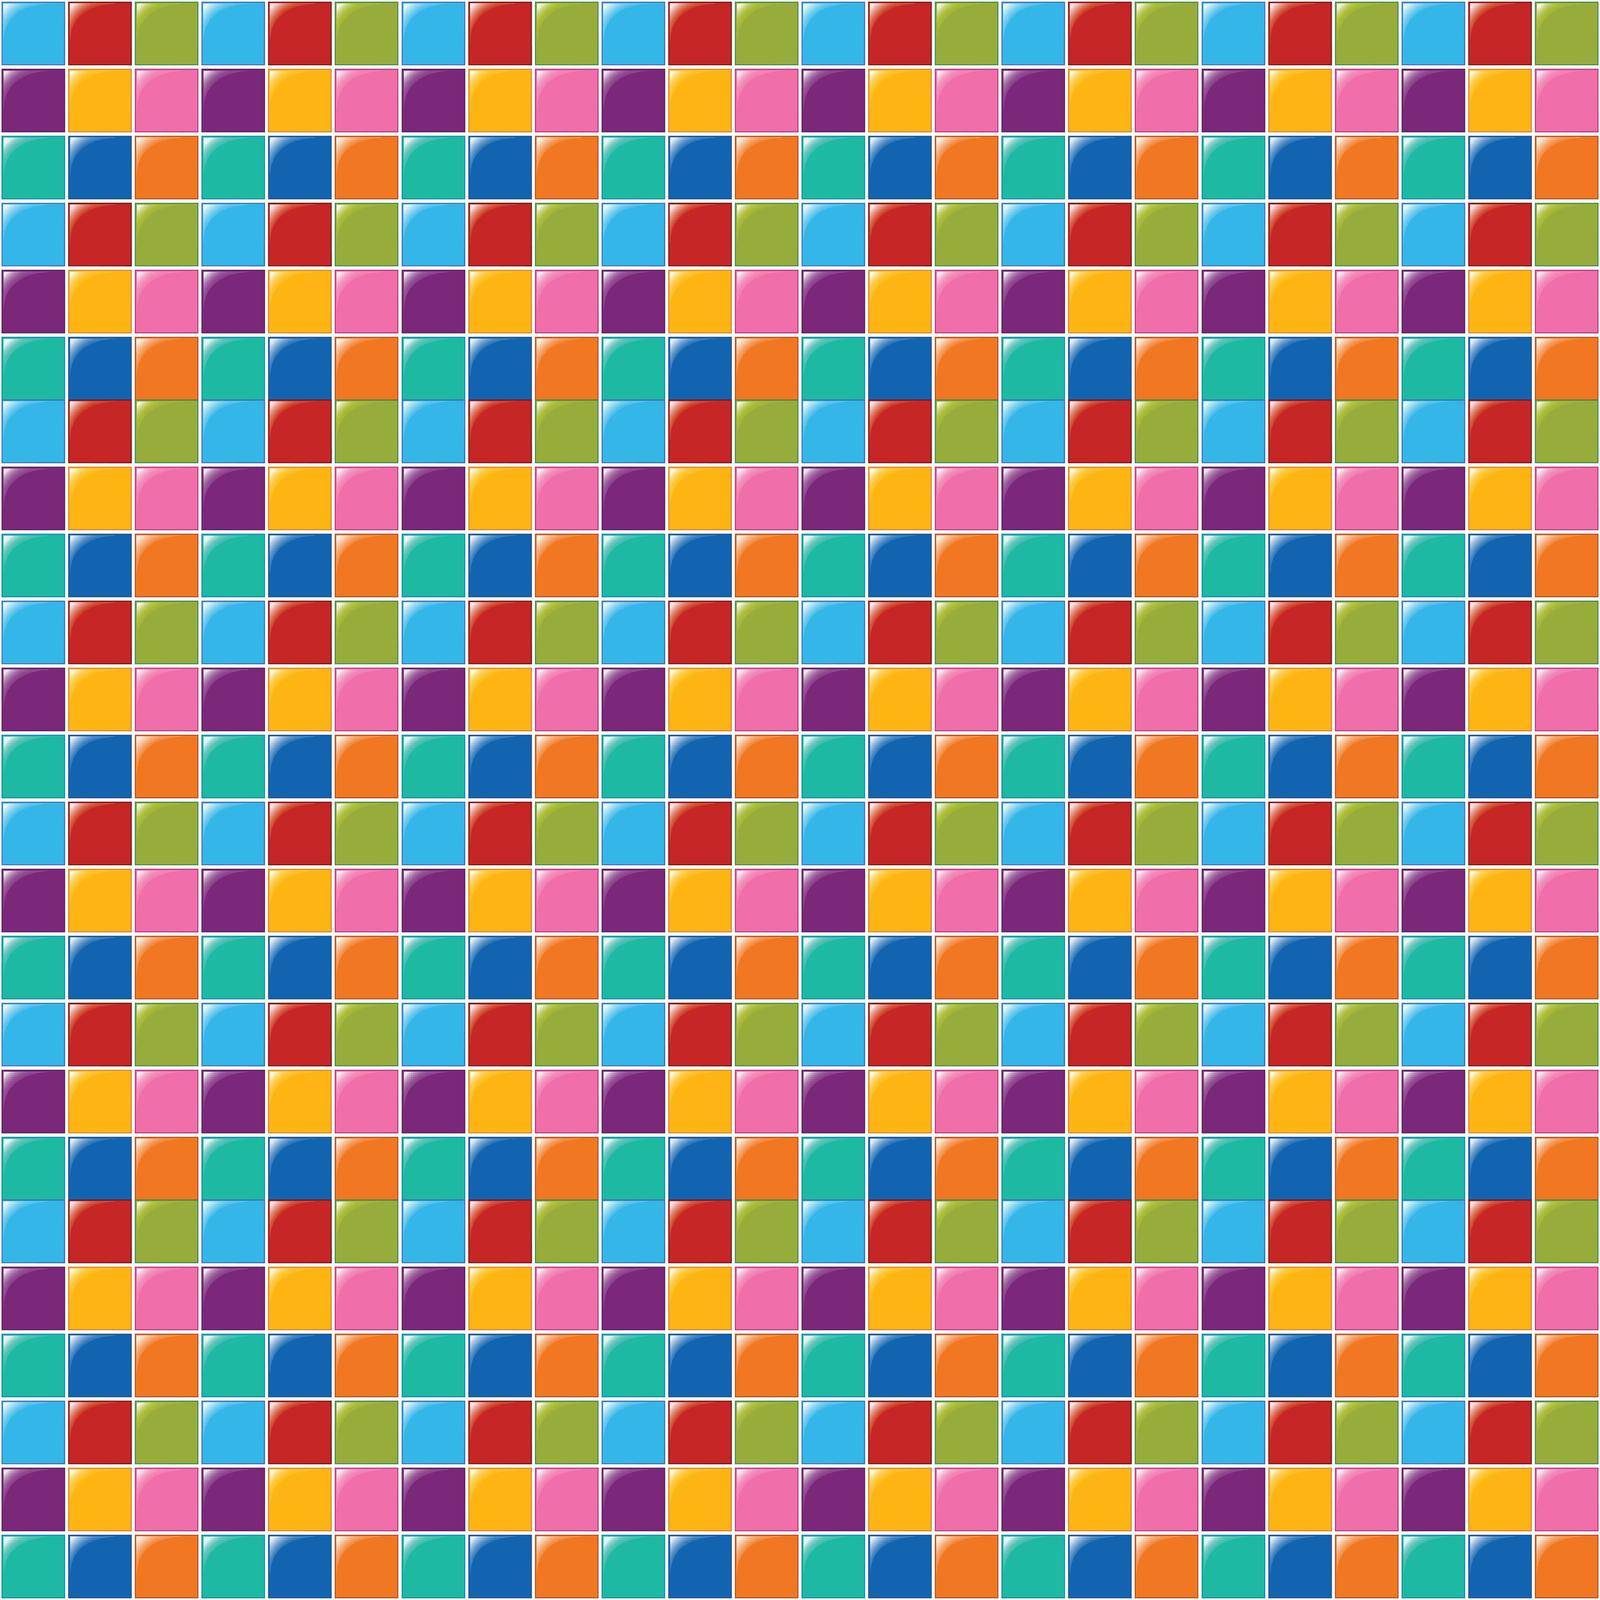 Colorful square shape seamless tiles